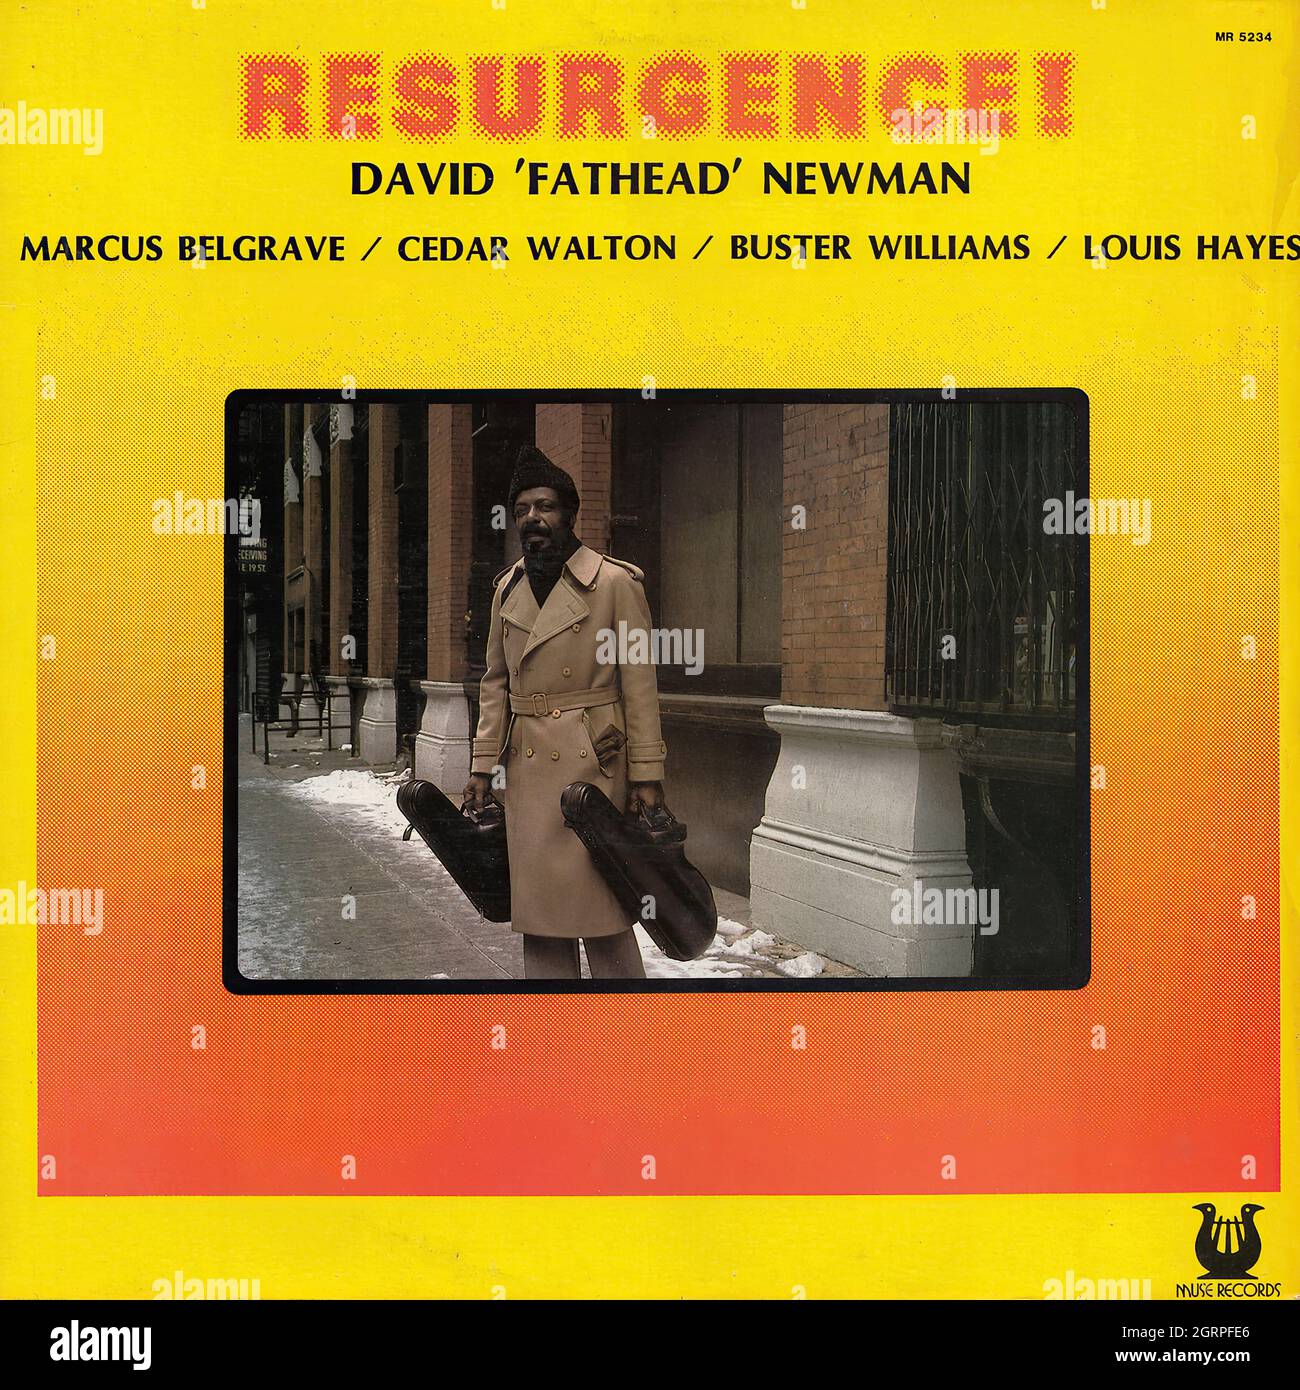 David 'Fathead' Newman - Resurgence! - Vintage Vinyl Record Cover Stock Photo